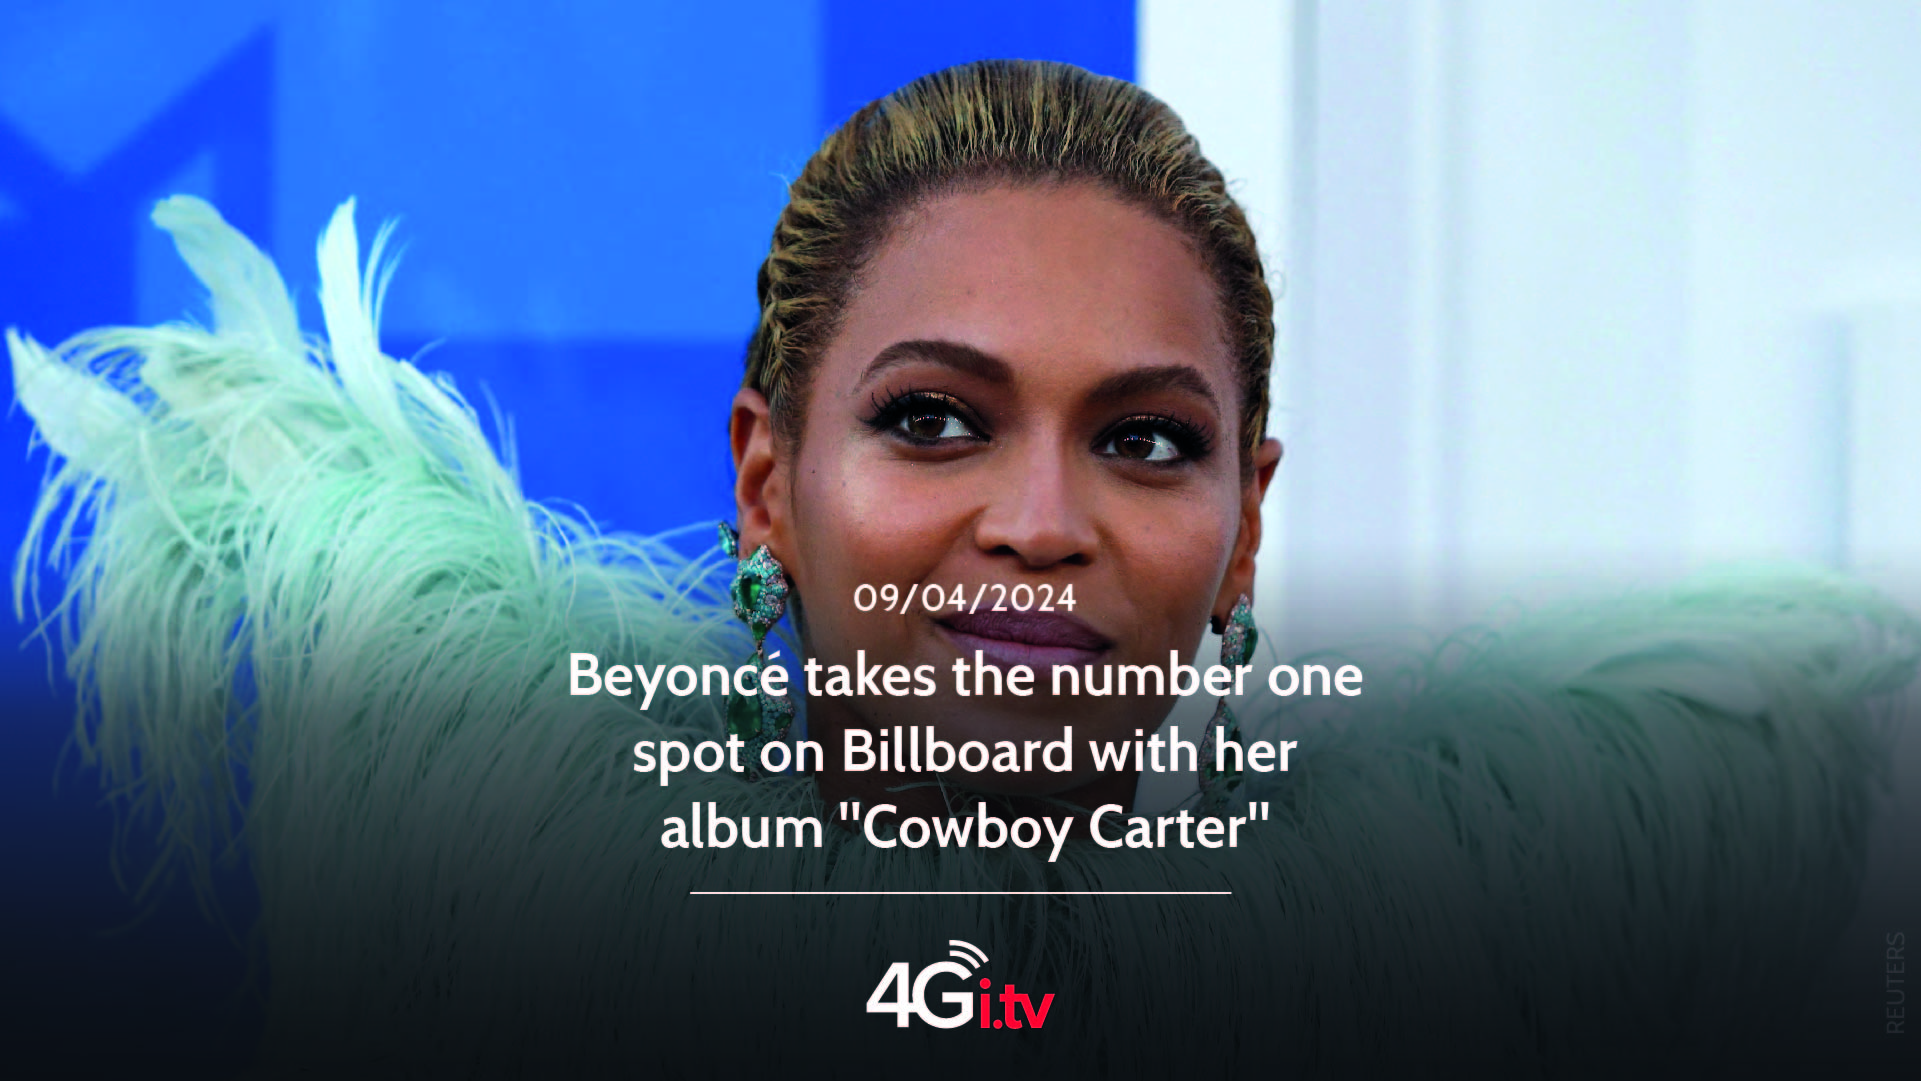 Подробнее о статье Beyoncé takes the number one spot on Billboard with her album “Cowboy Carter”